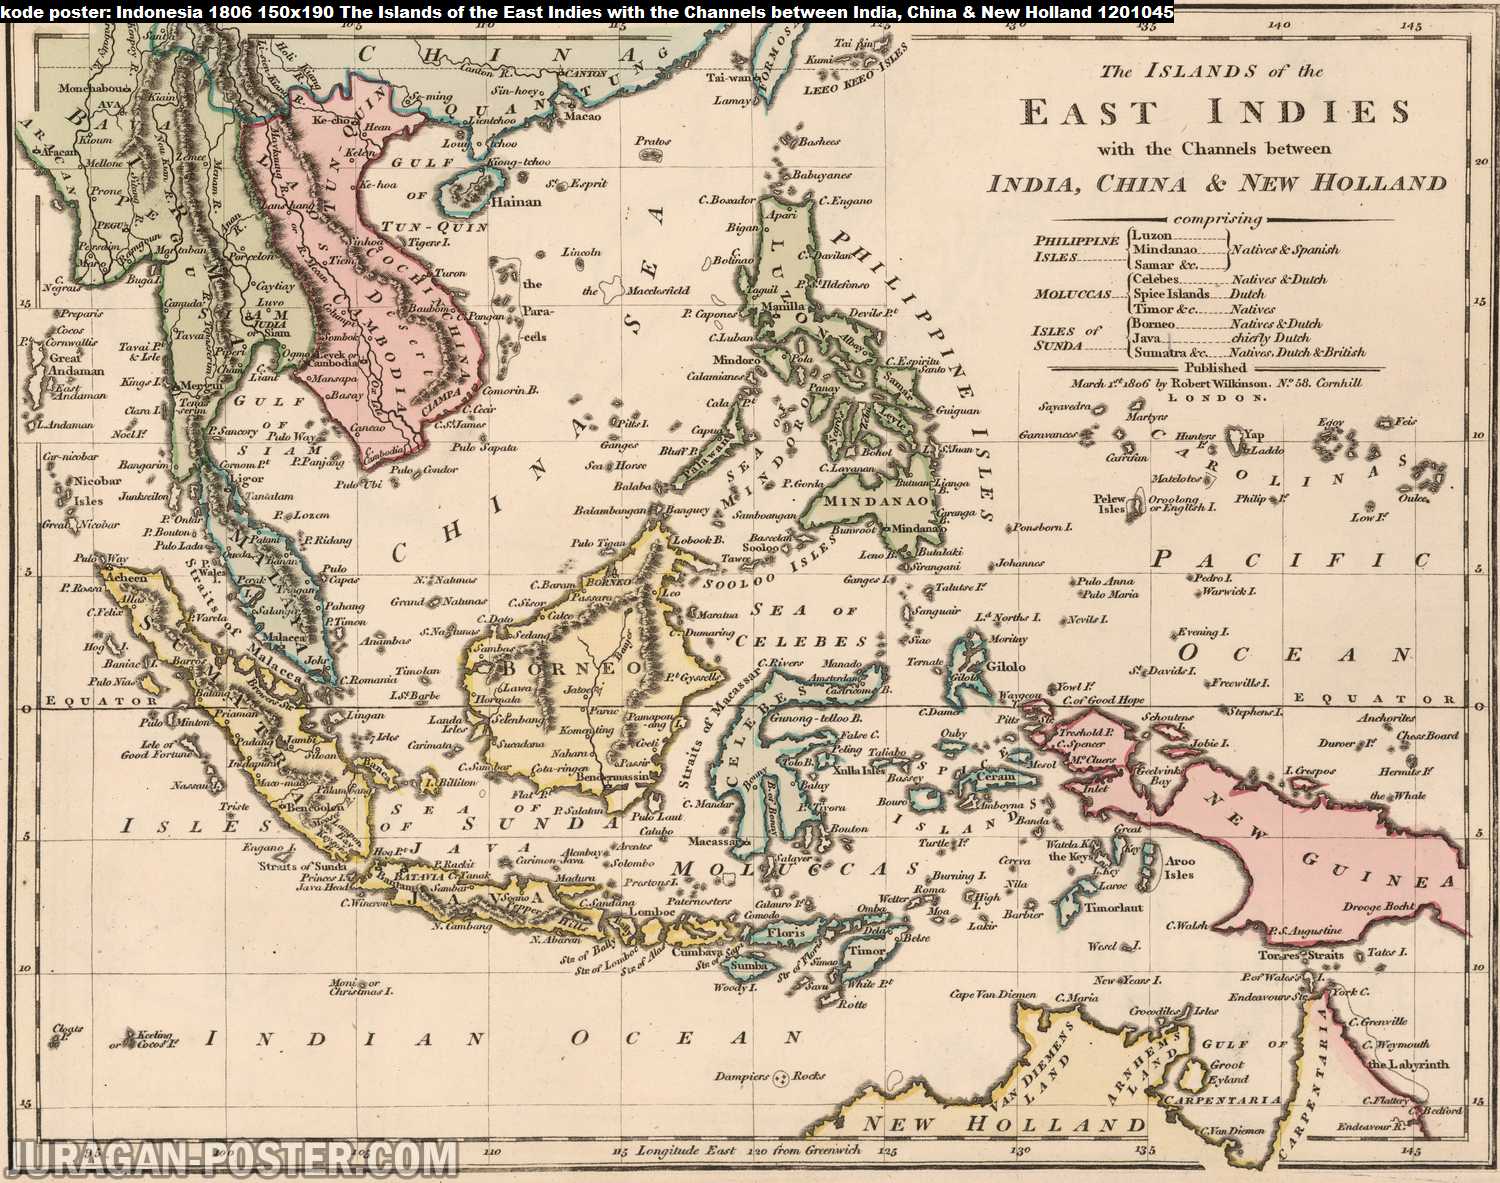 peta indonesia kuno tahun 1806